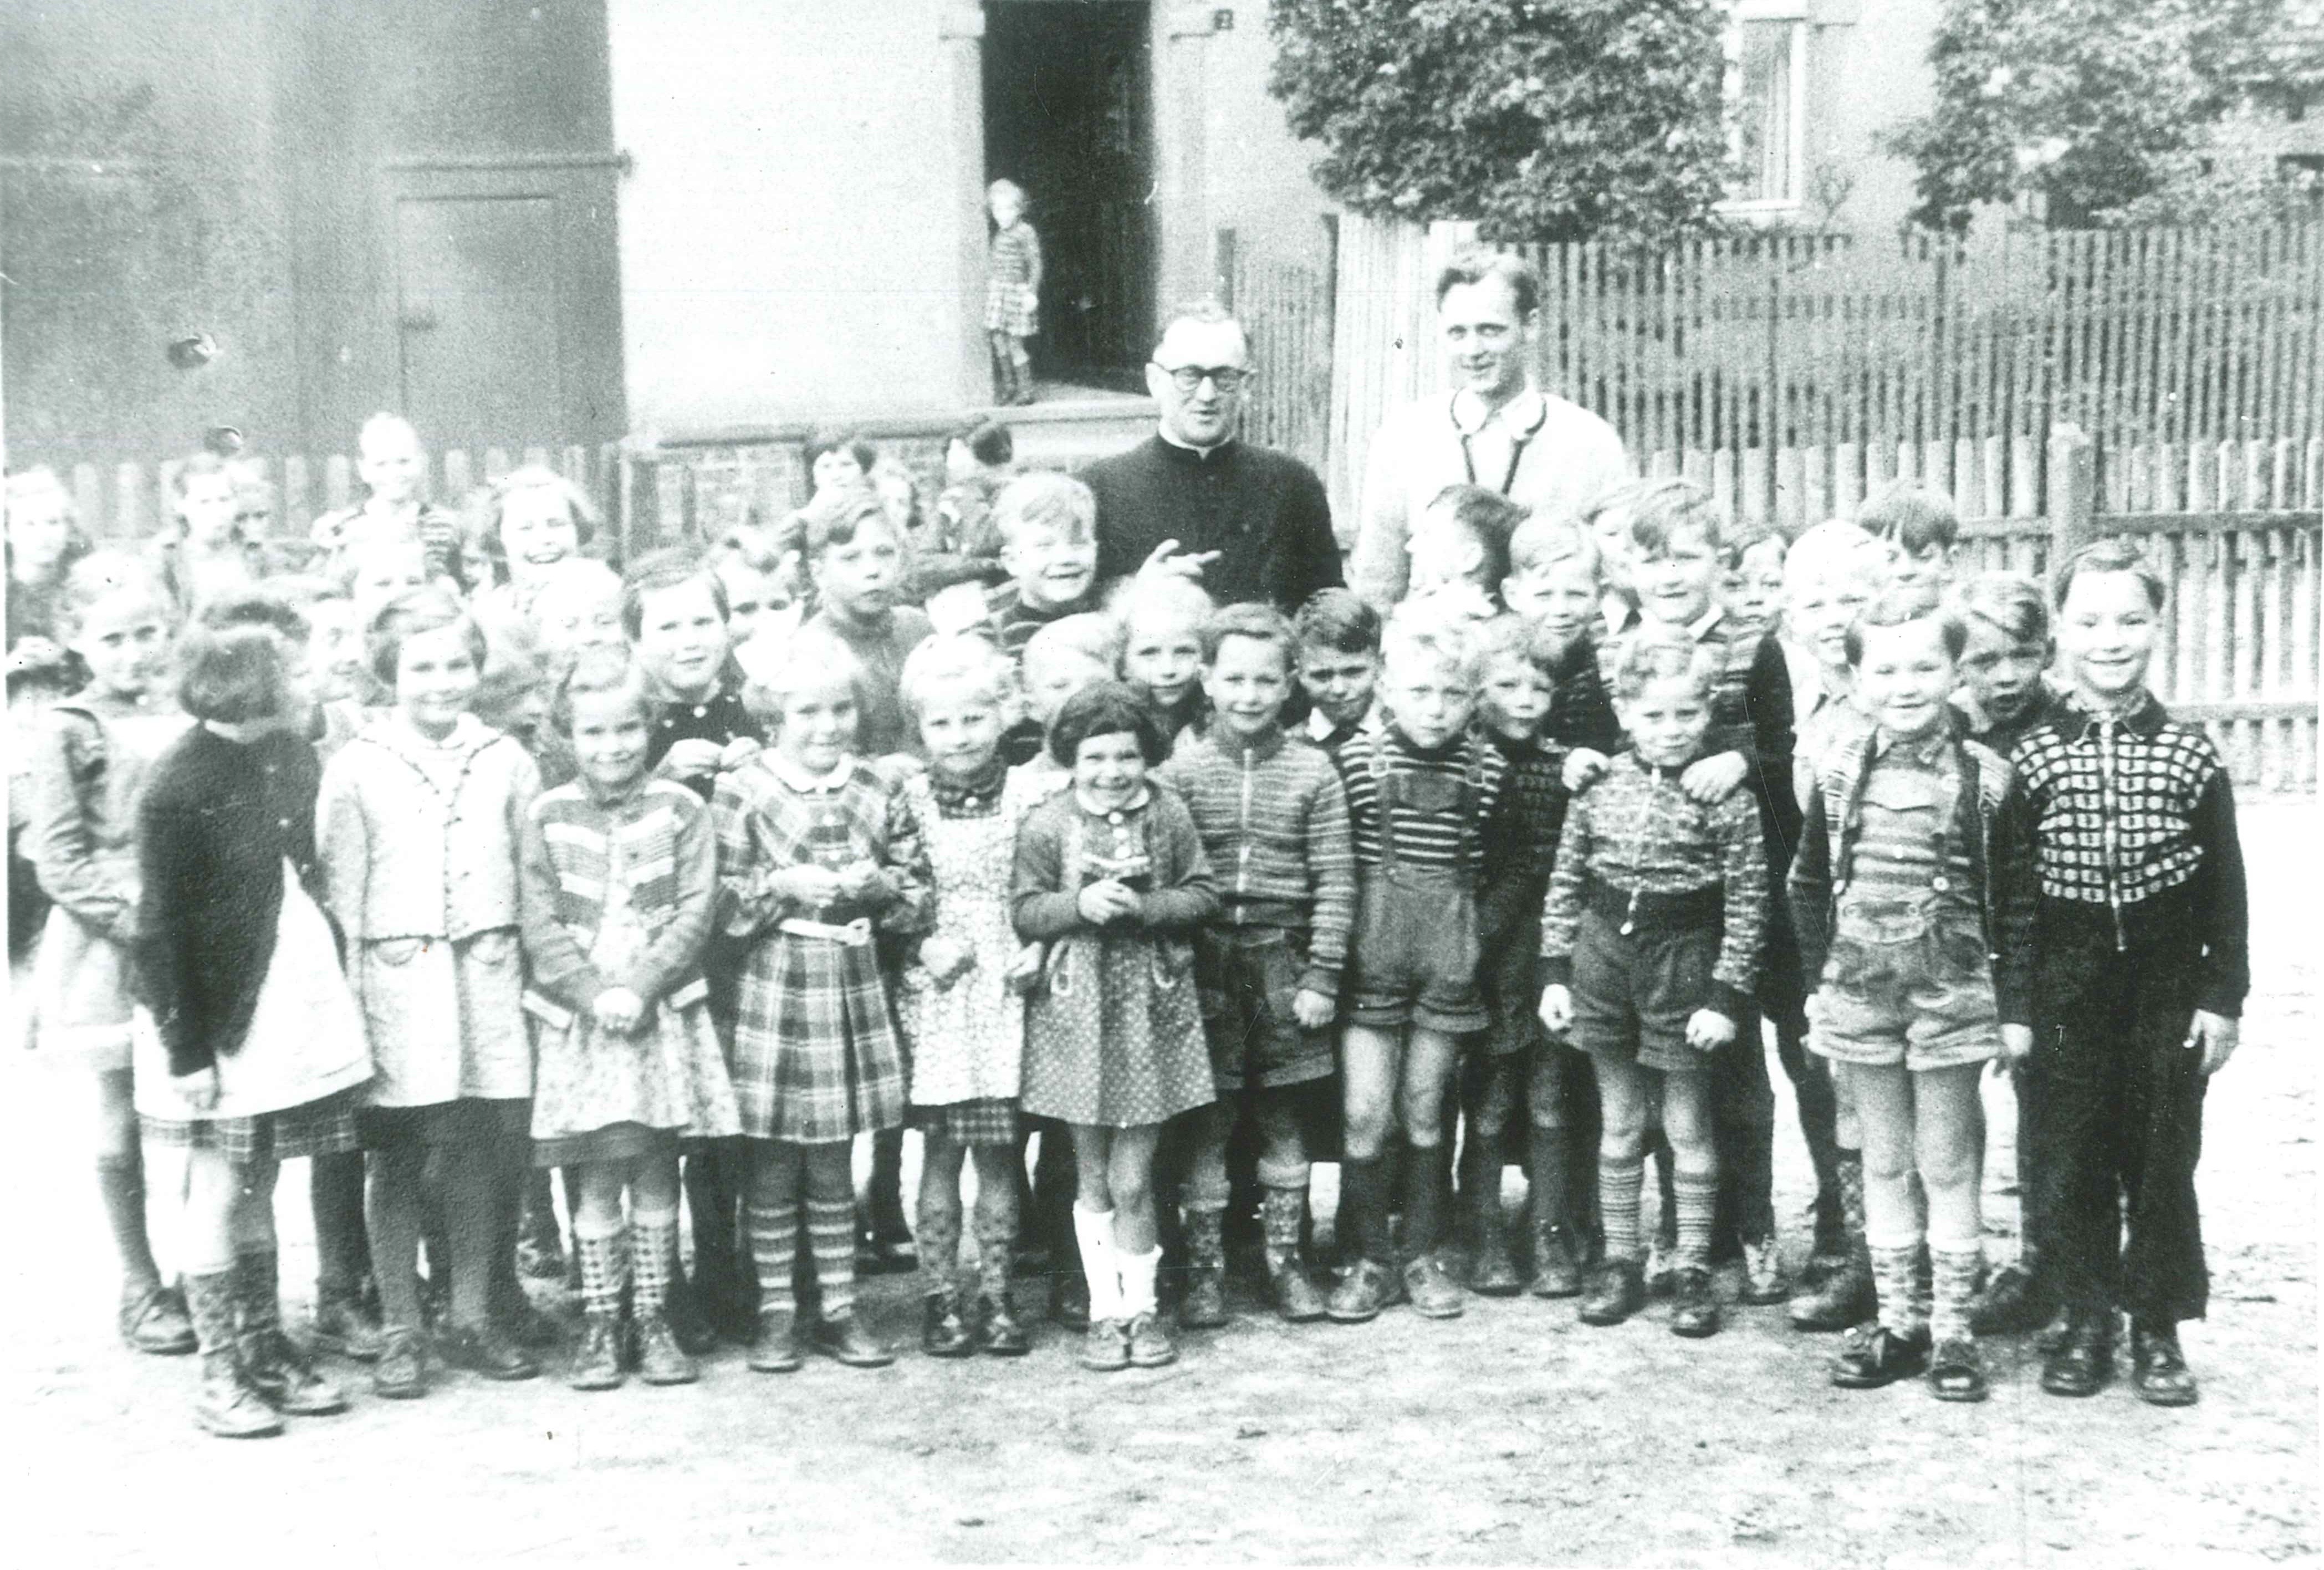 Klassenfoto, katholische Schule "Schönblick", Bendorf-Stromberg, 1955 (REM CC BY-NC-SA)